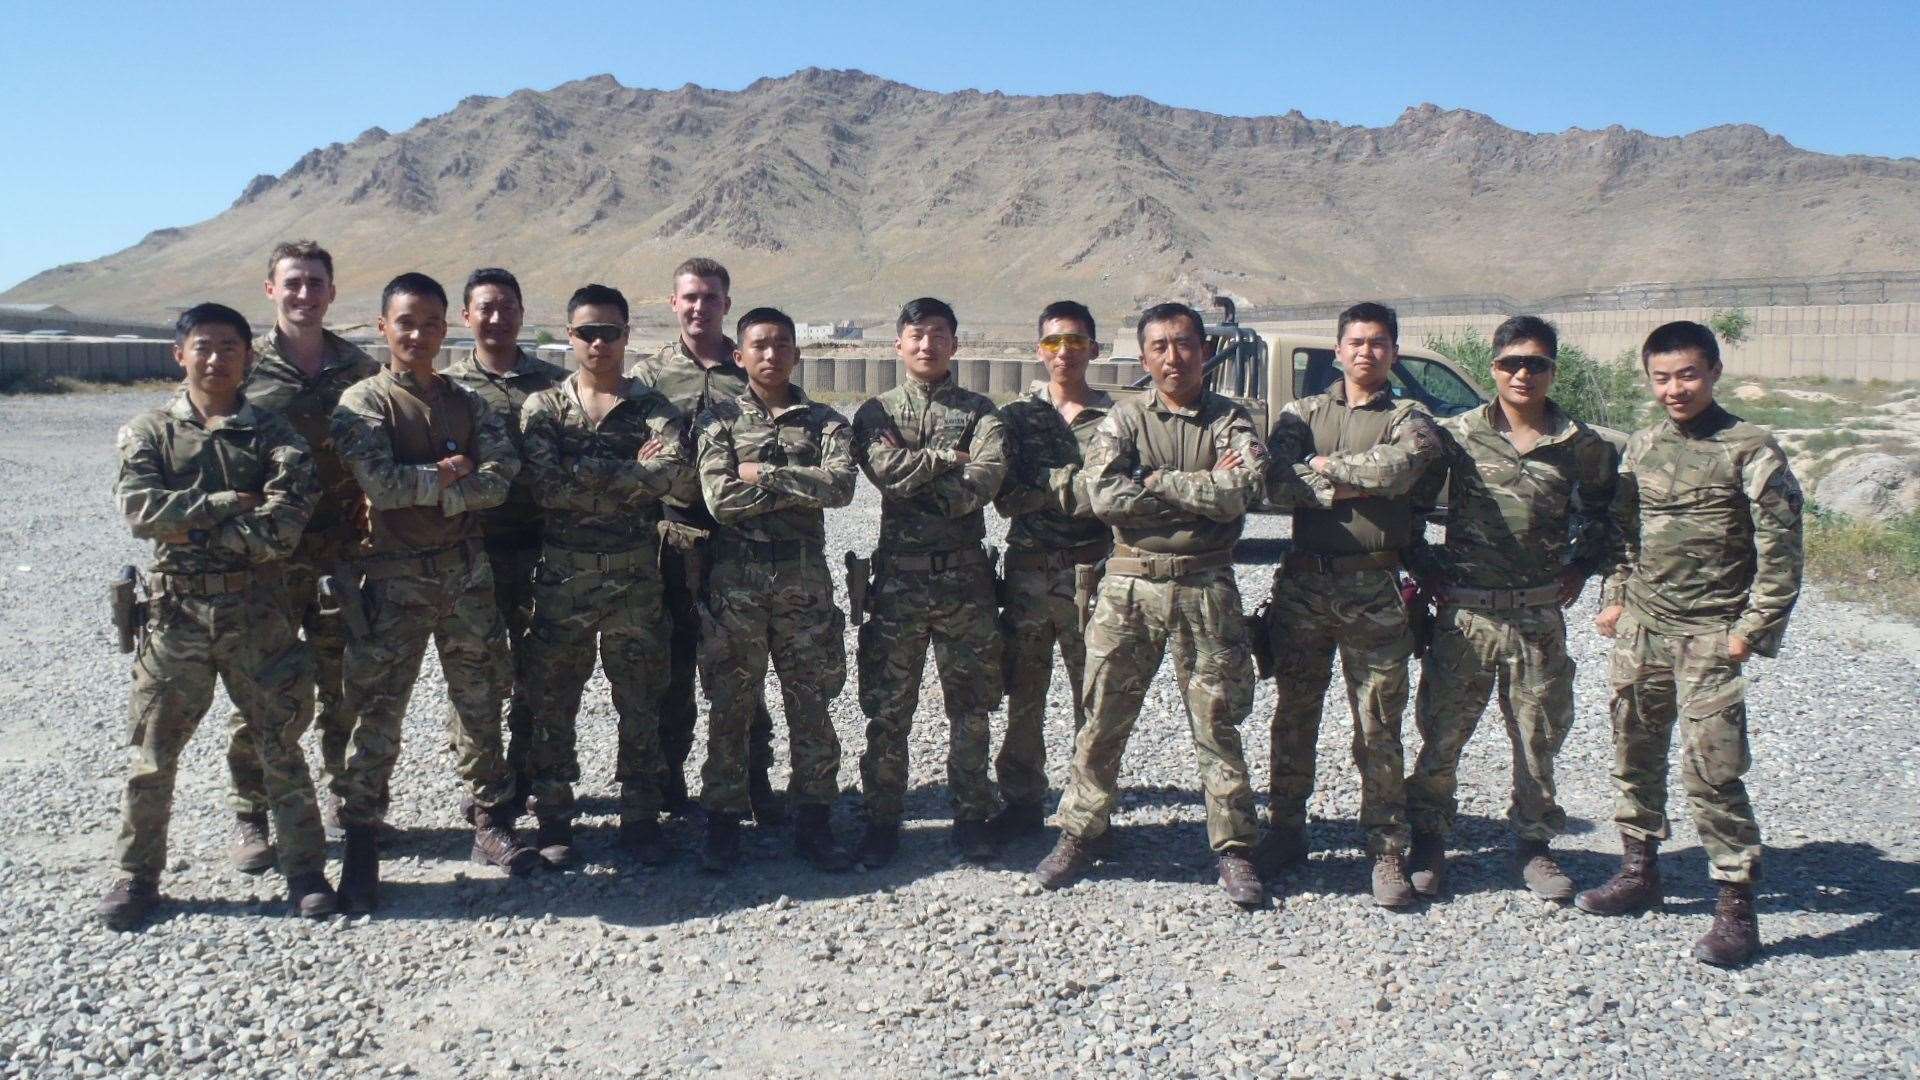 Gurkhas from Shorncliffe in Folkestone on tour in Afghanistan. Credit: British Army/Royal Gurkha Rifles